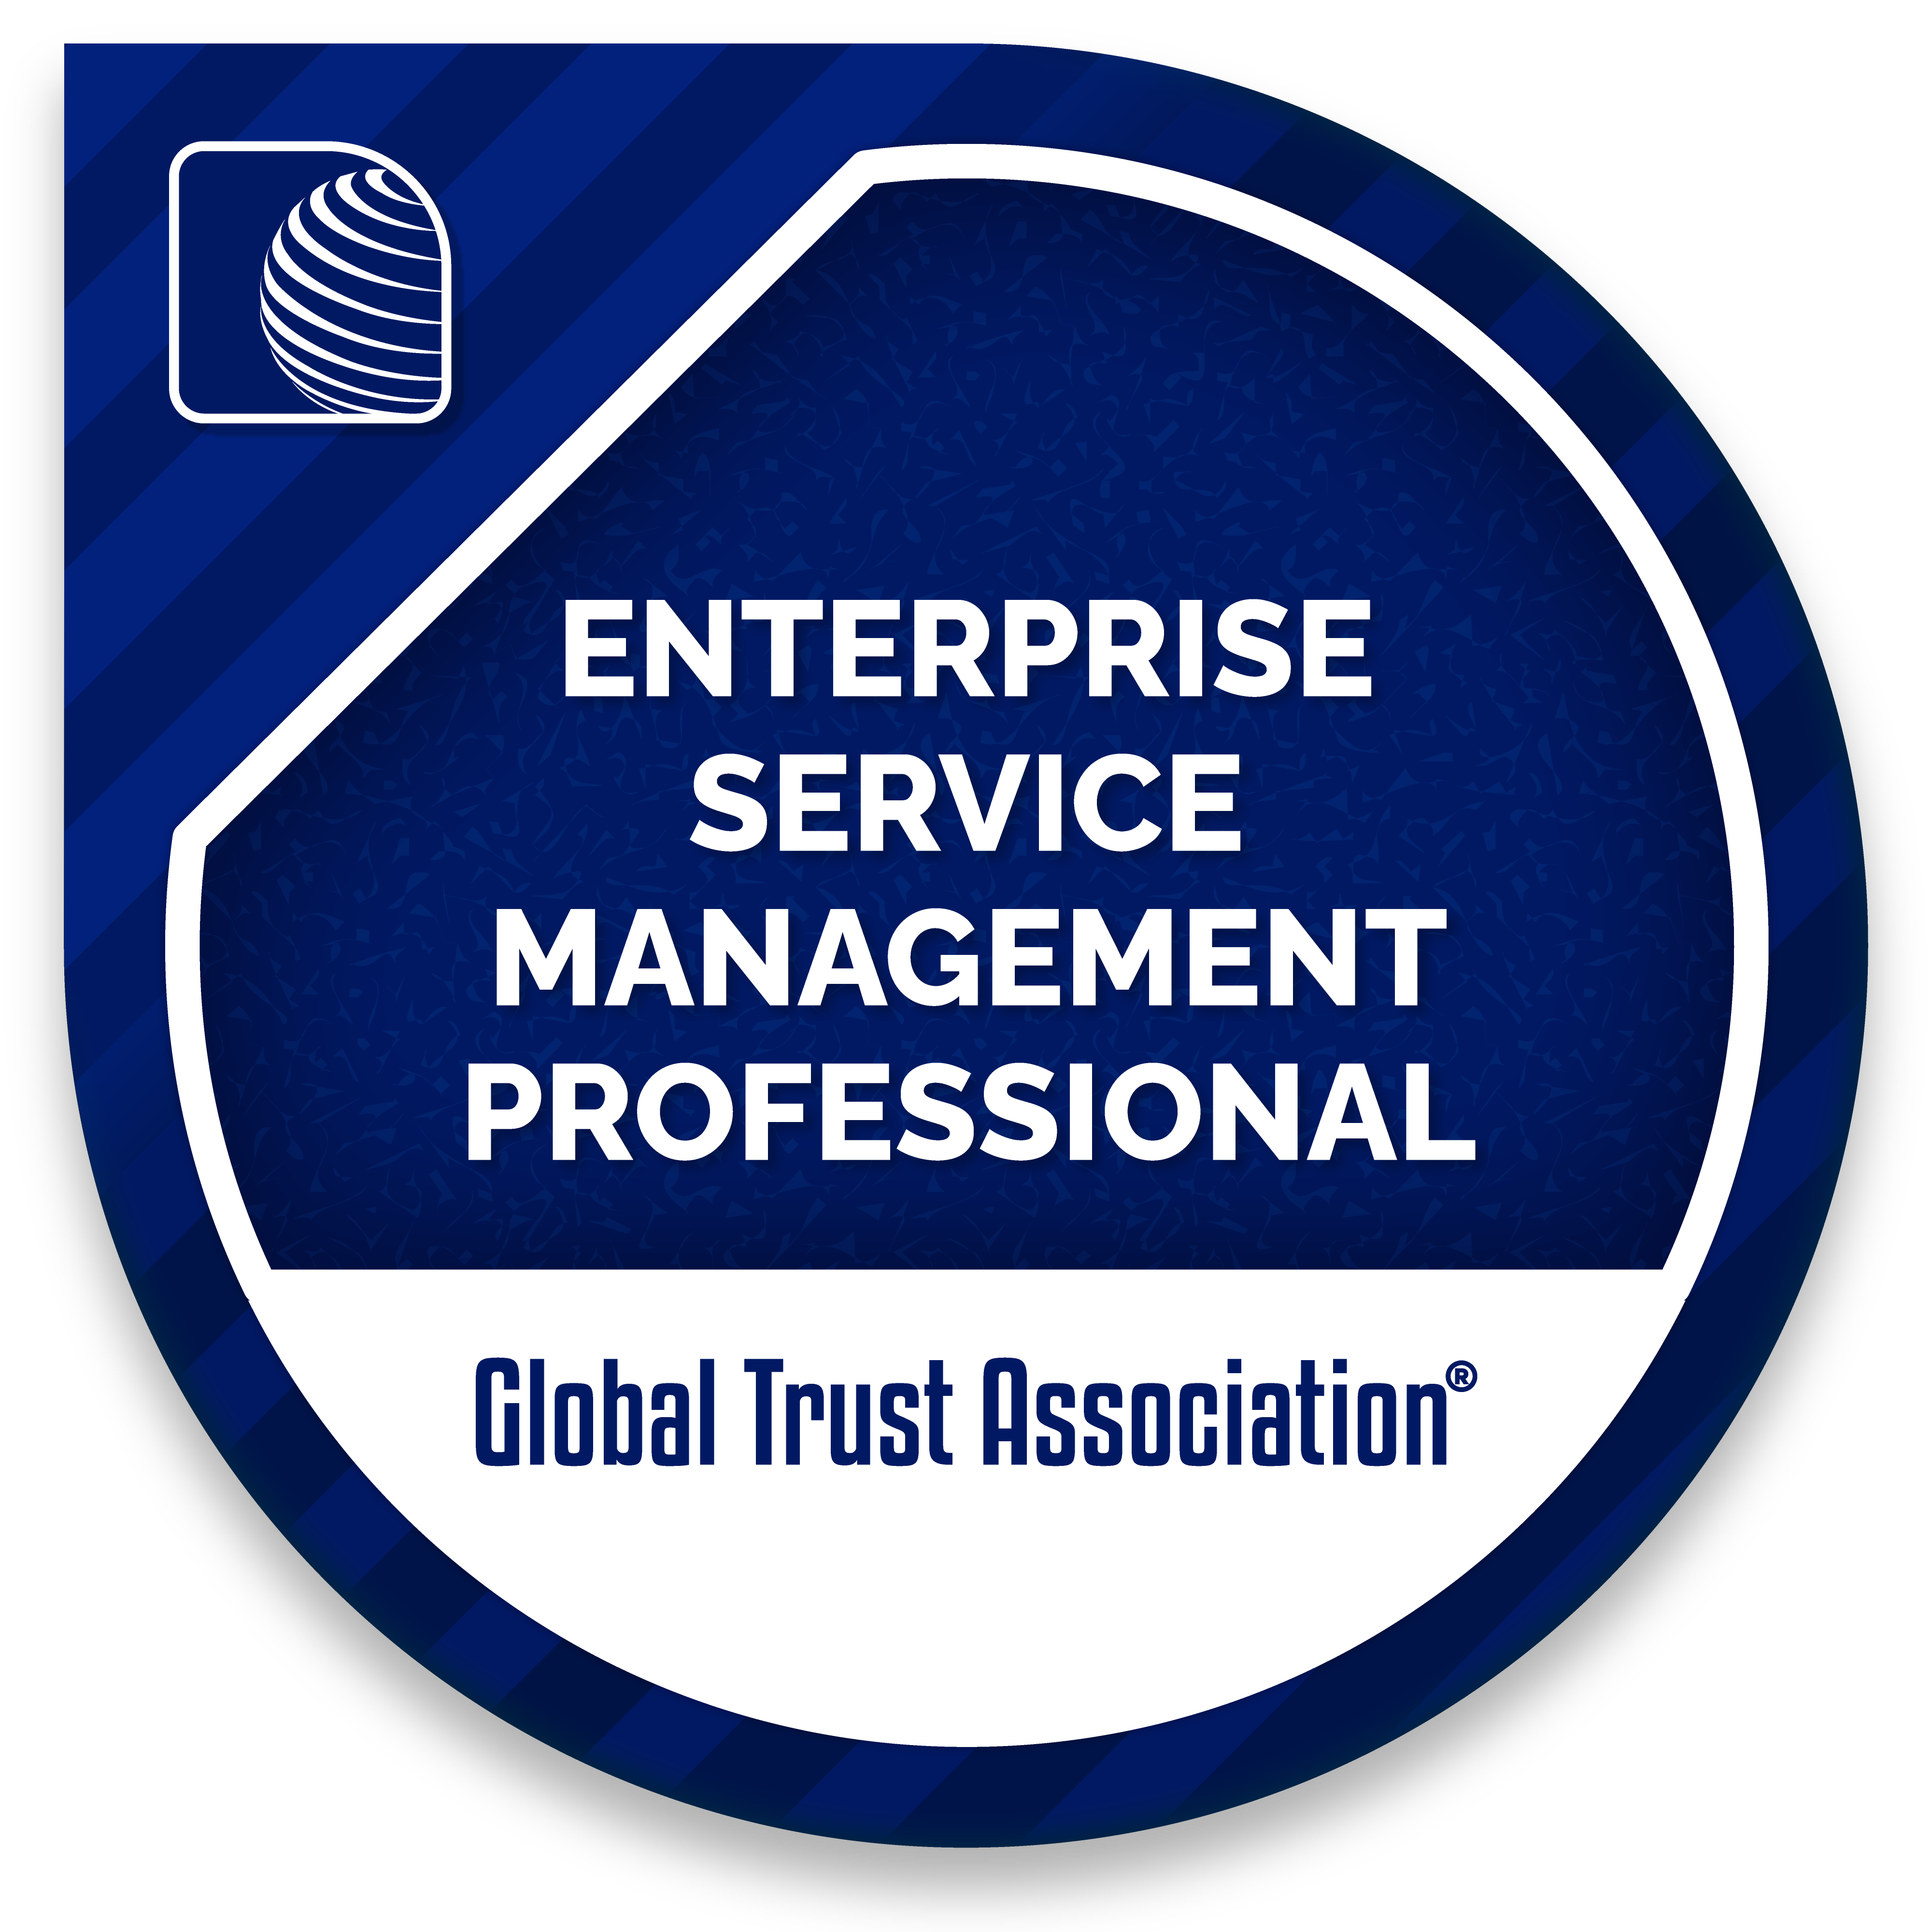 Certified Enterprise Service Management Professional (ESM)